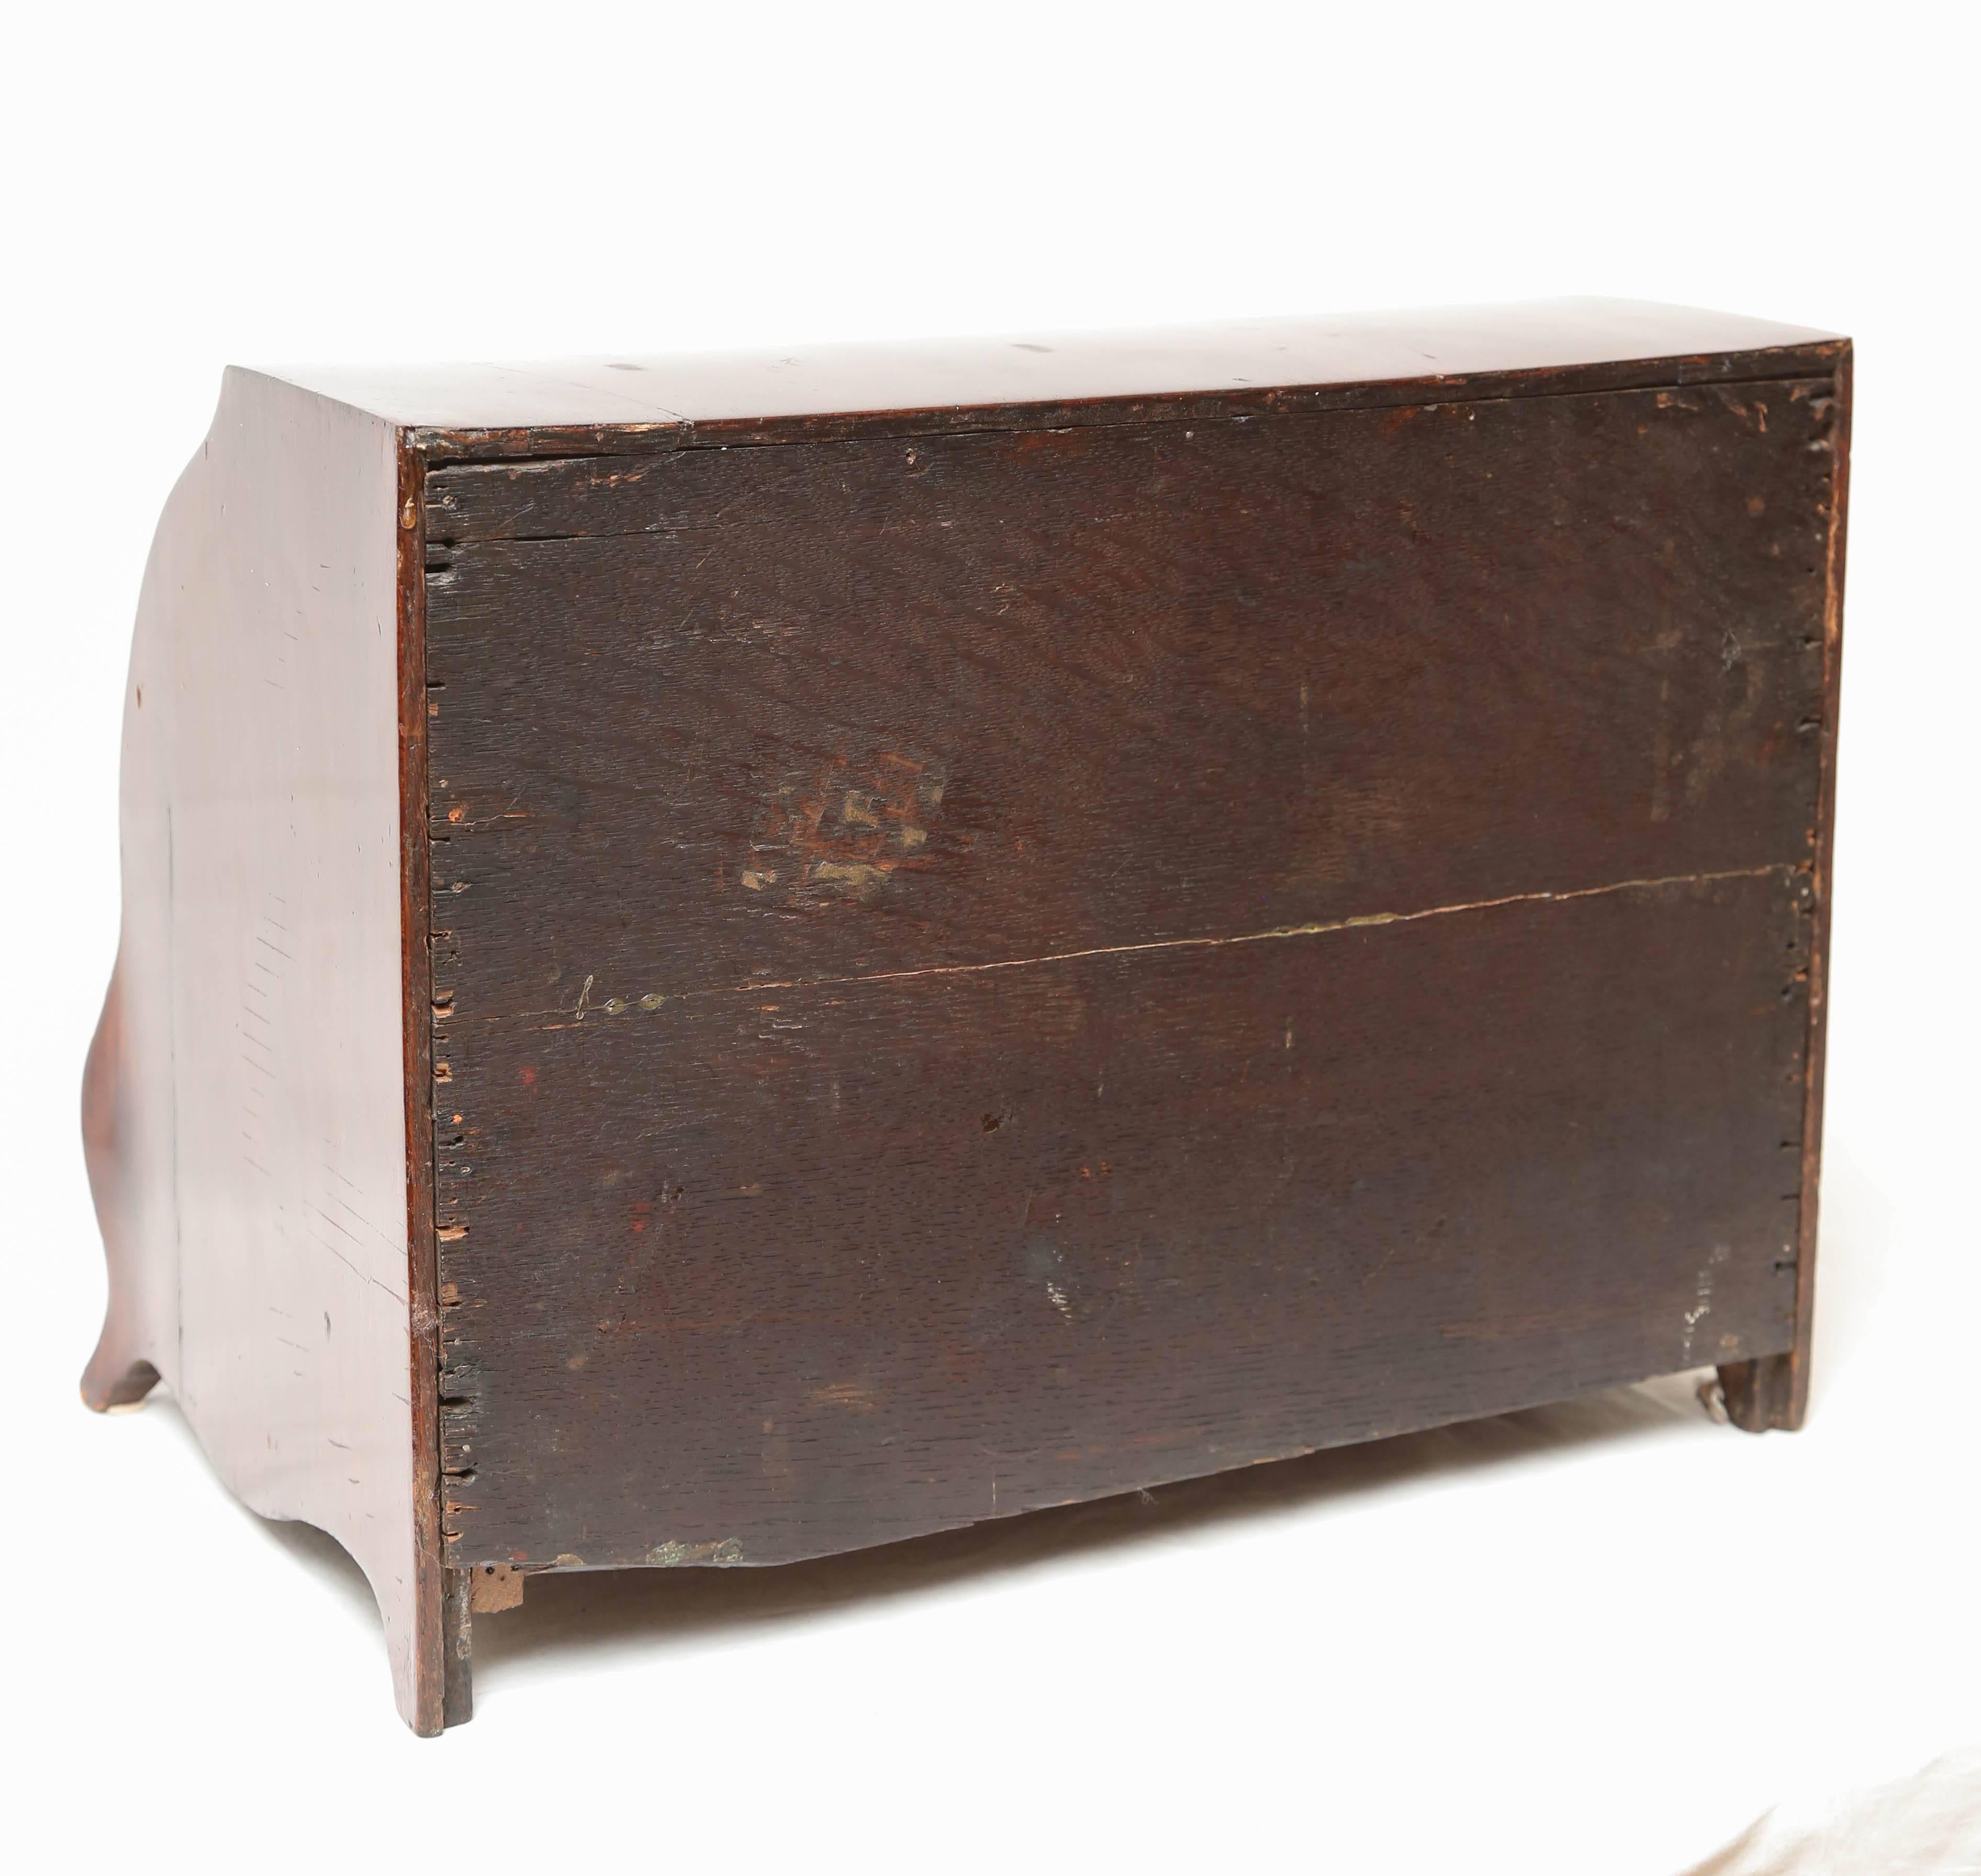 Superb 19th Century Continental Miniature Desk or Jewel Box 1